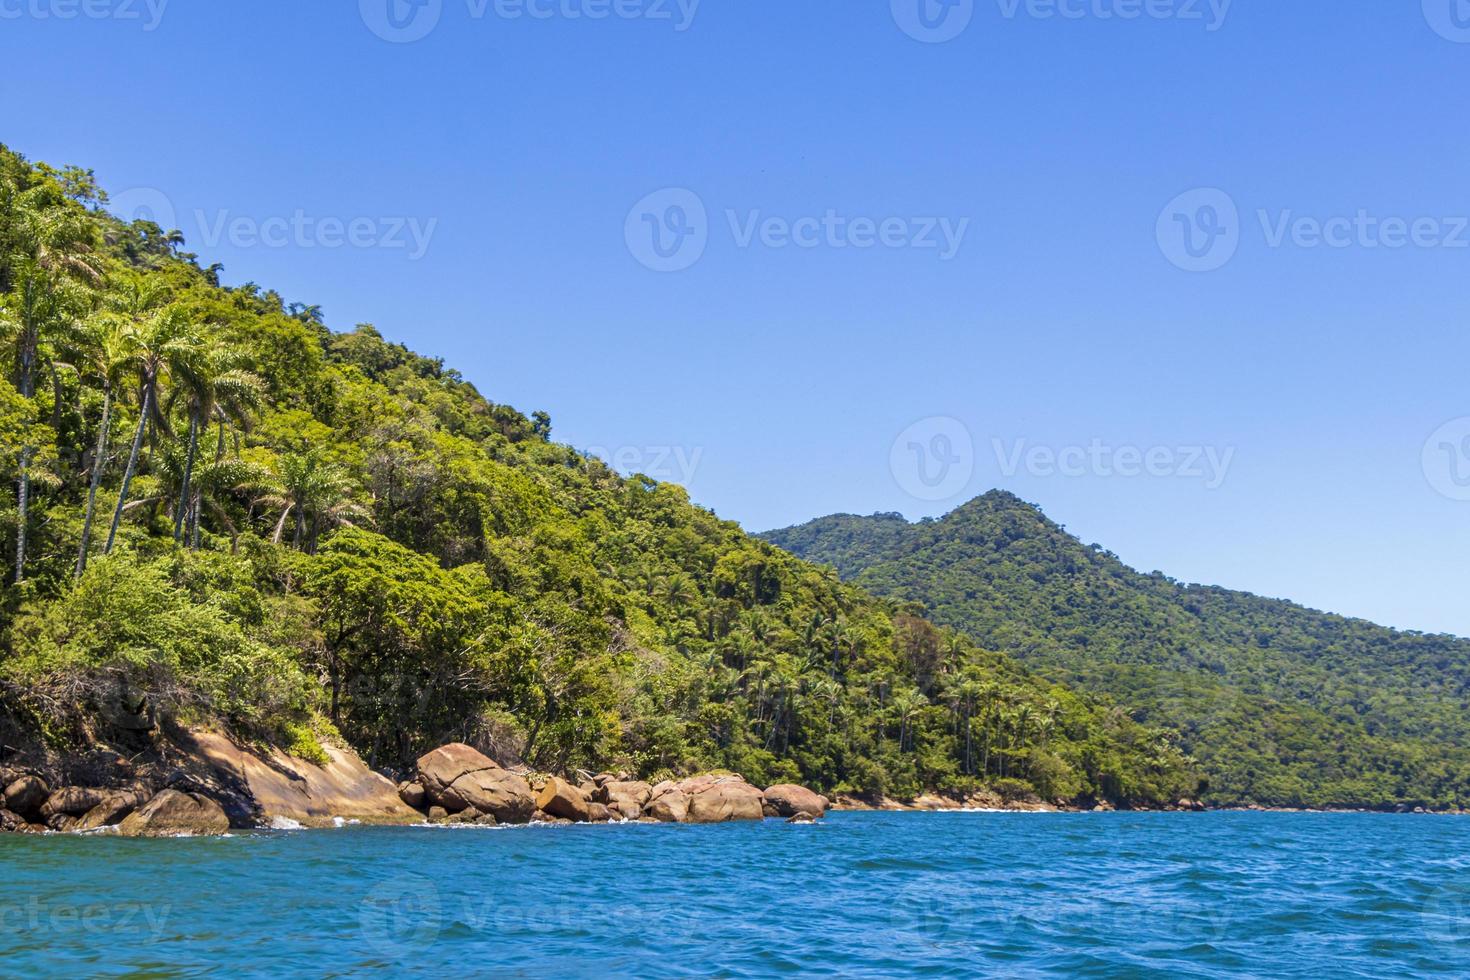 het grote tropische eiland ilha grande, angra dos reis brazilië. foto